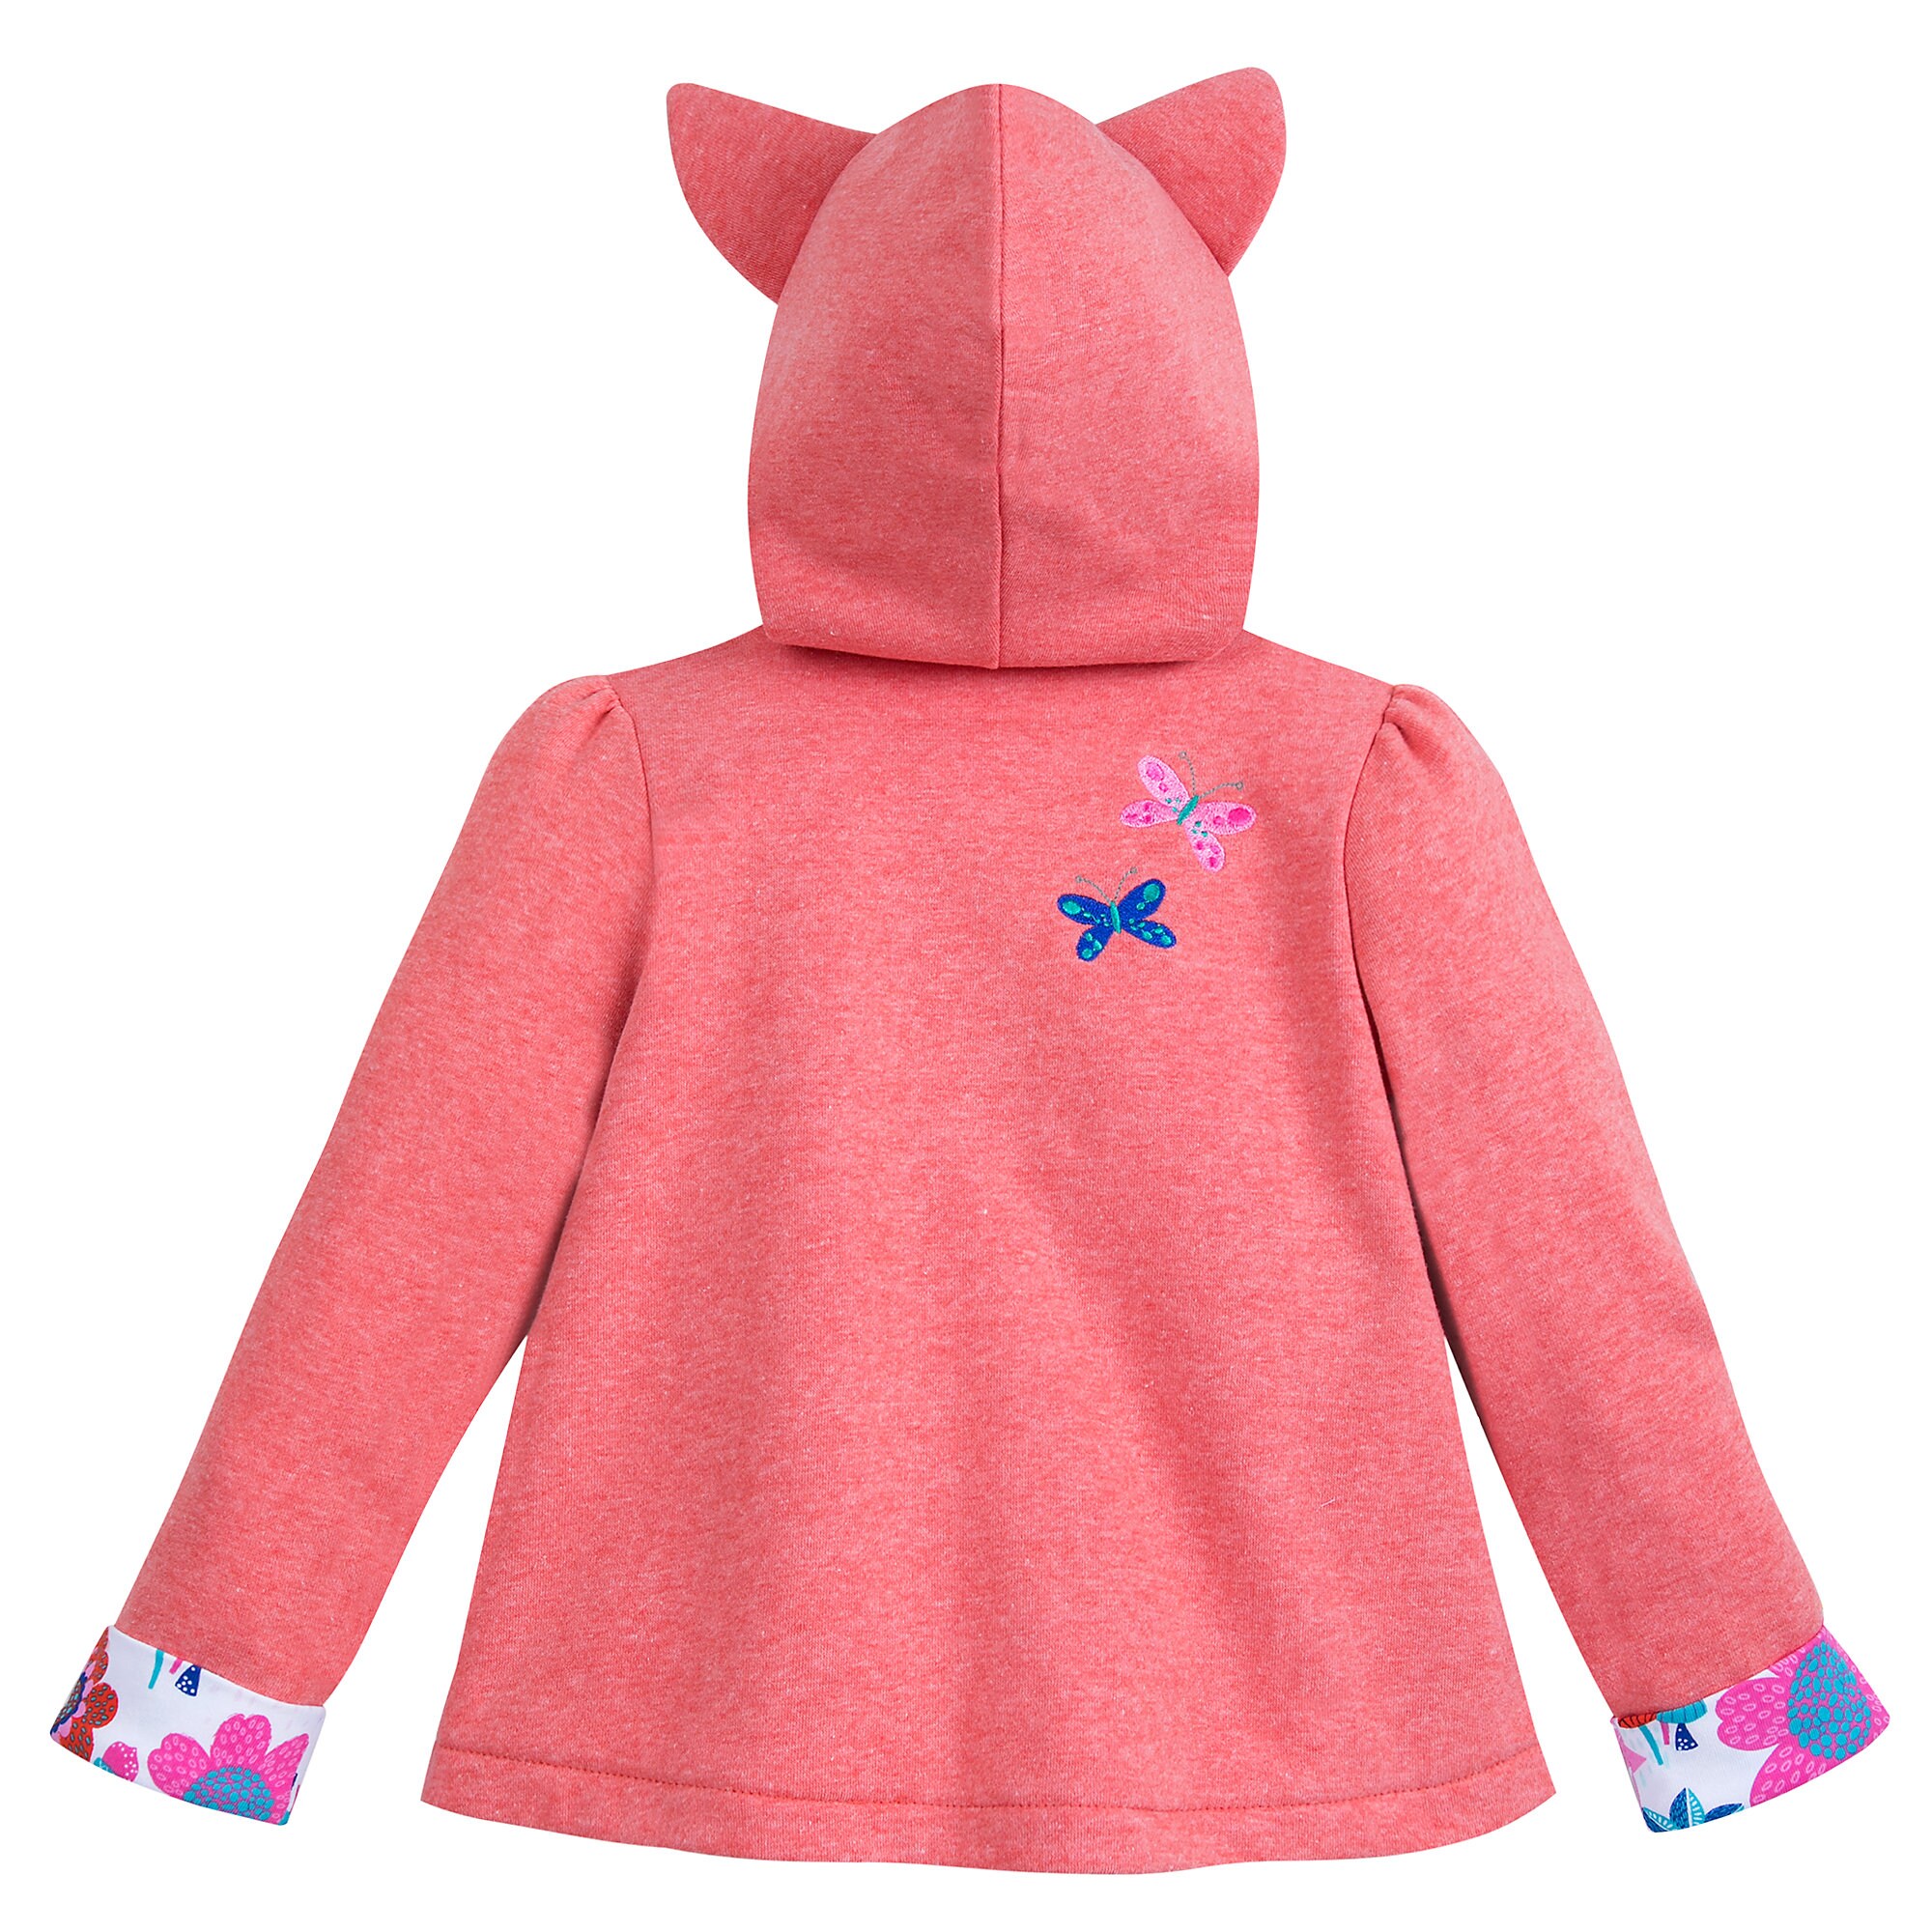 Bambi Hoodie Jacket for Girls - Disney Furrytale friends